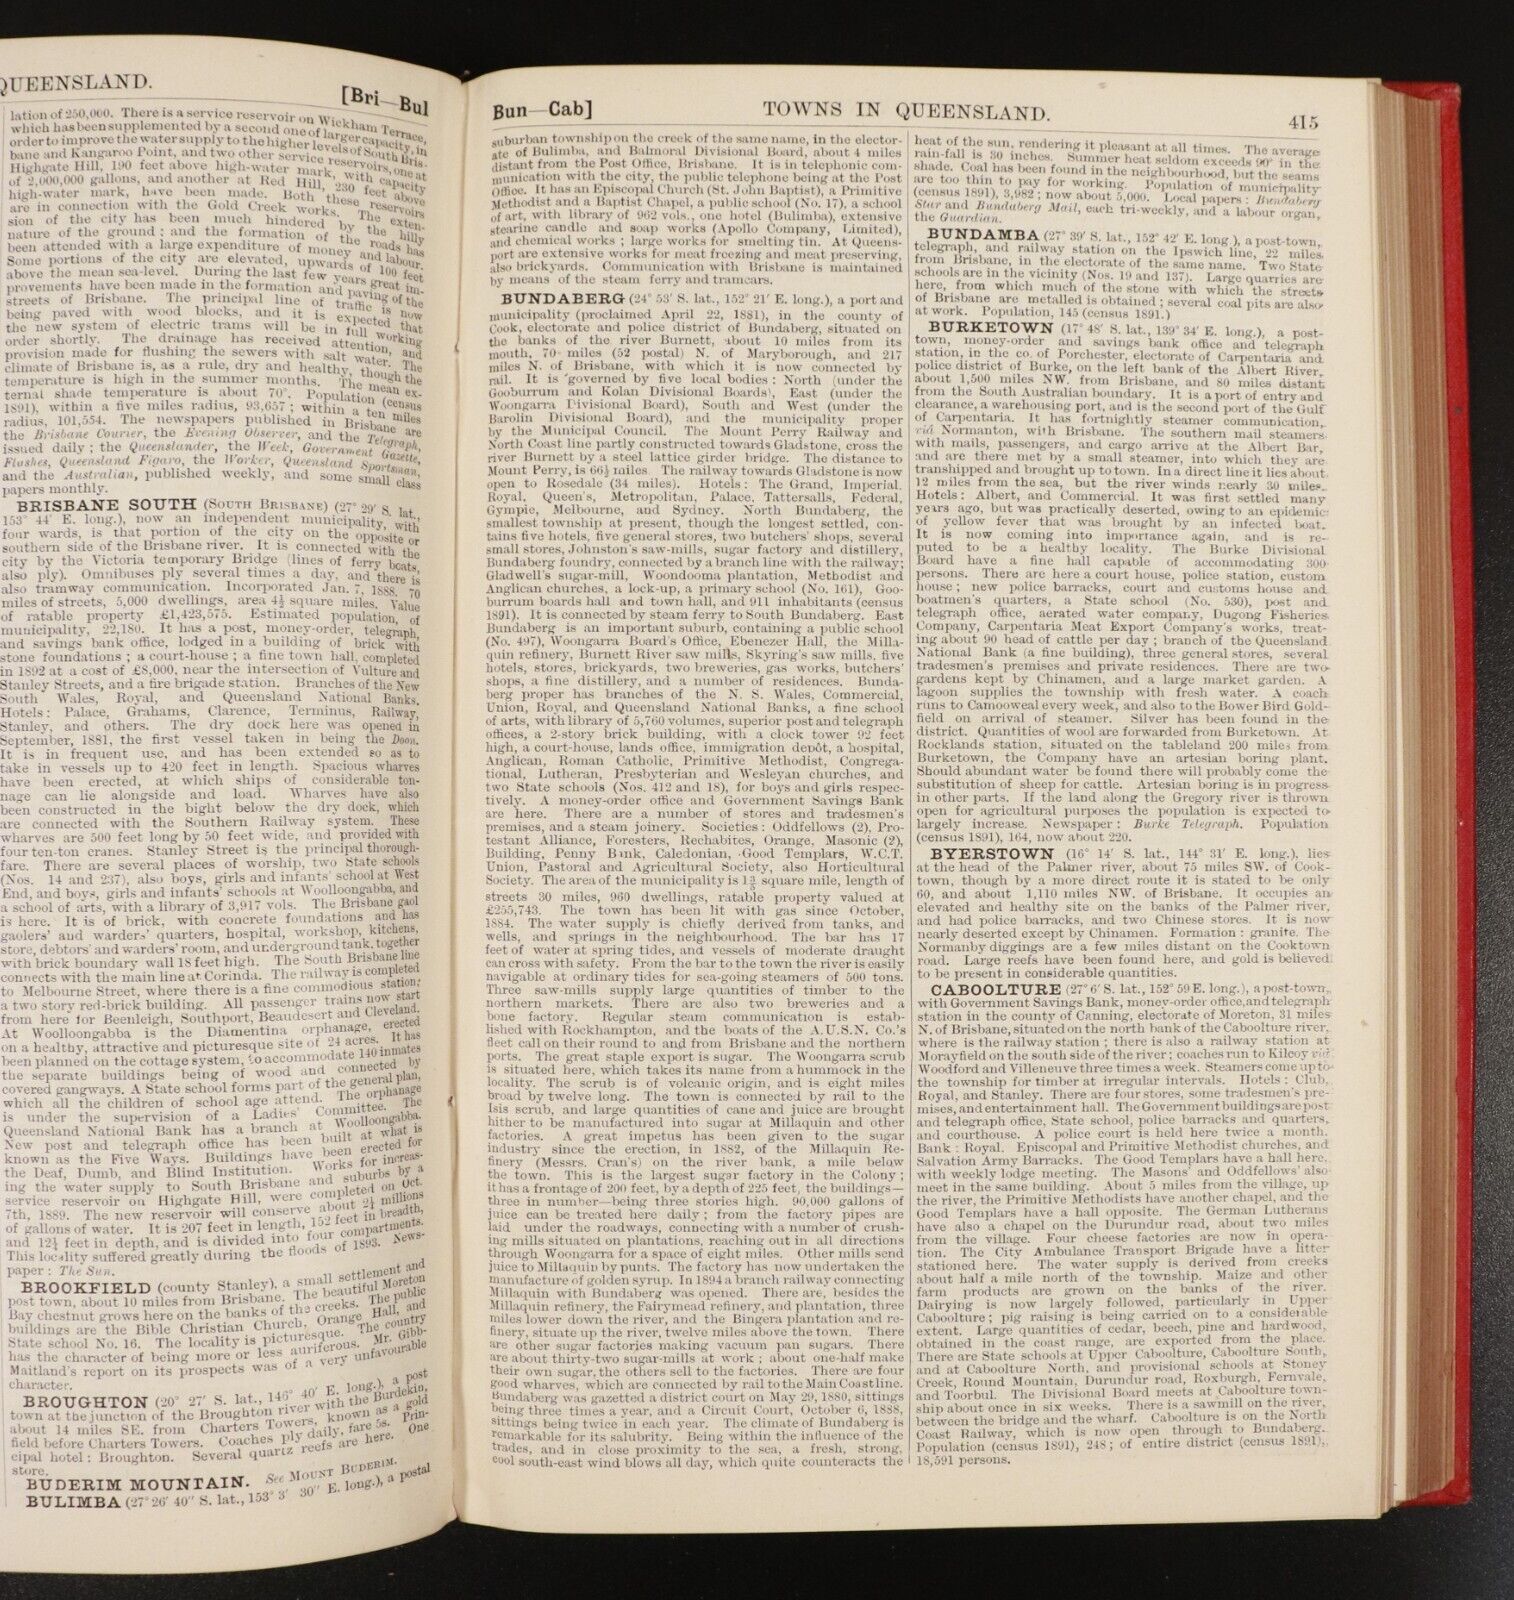 1897 Australian Handbook Directory Business Guide Antiquarian Reference Book